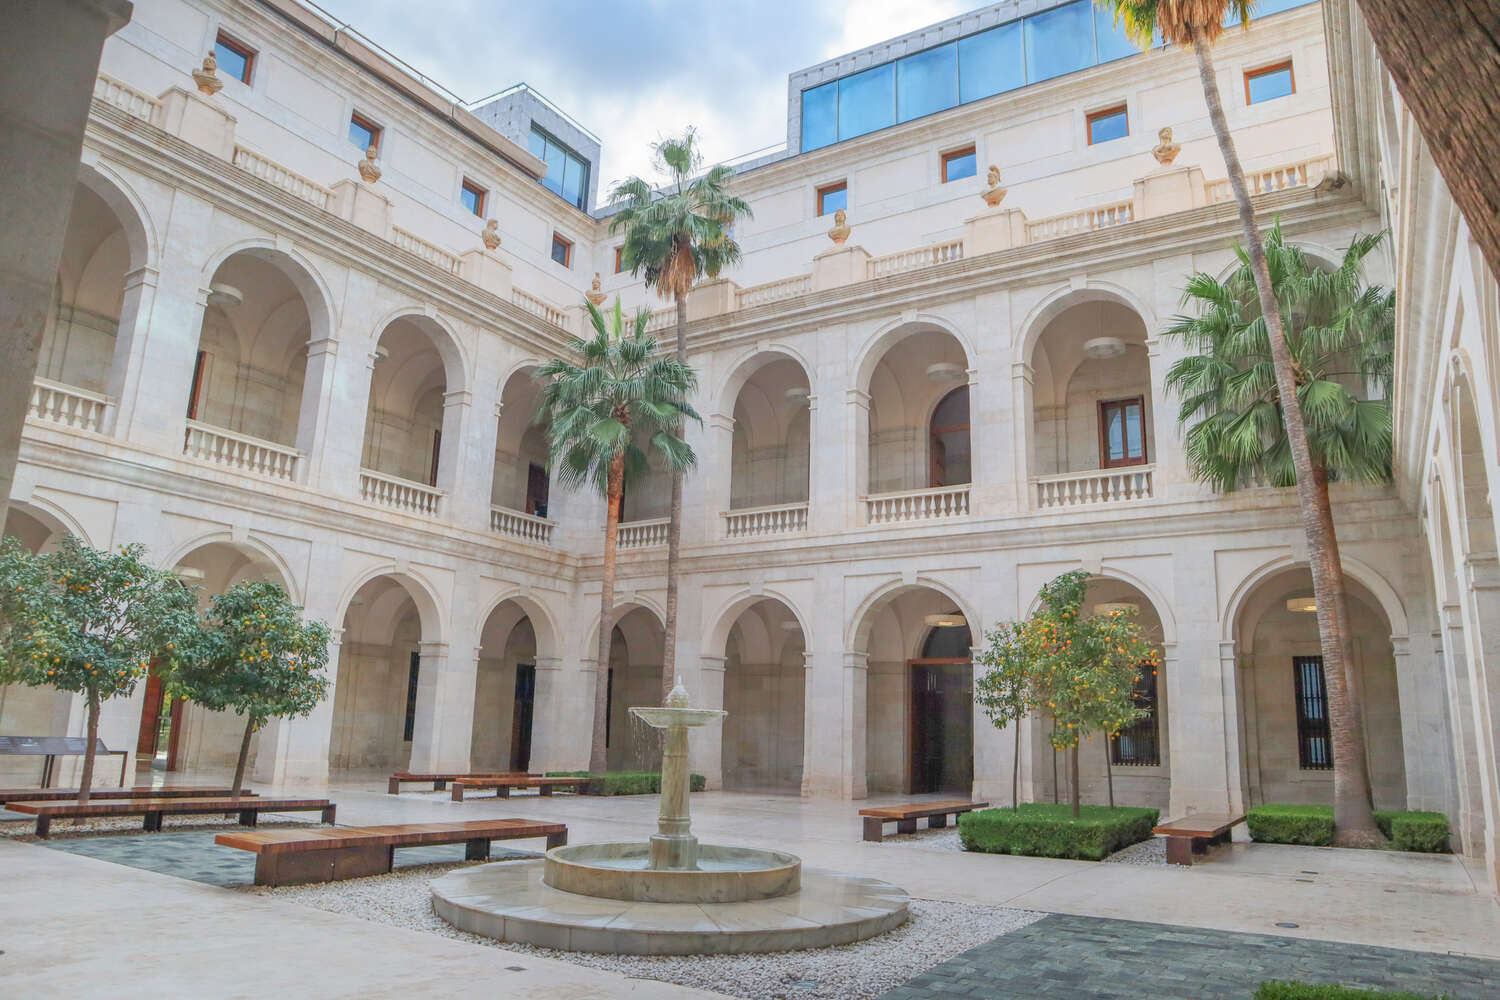 Courtyard-at-the-Malaga-Museum